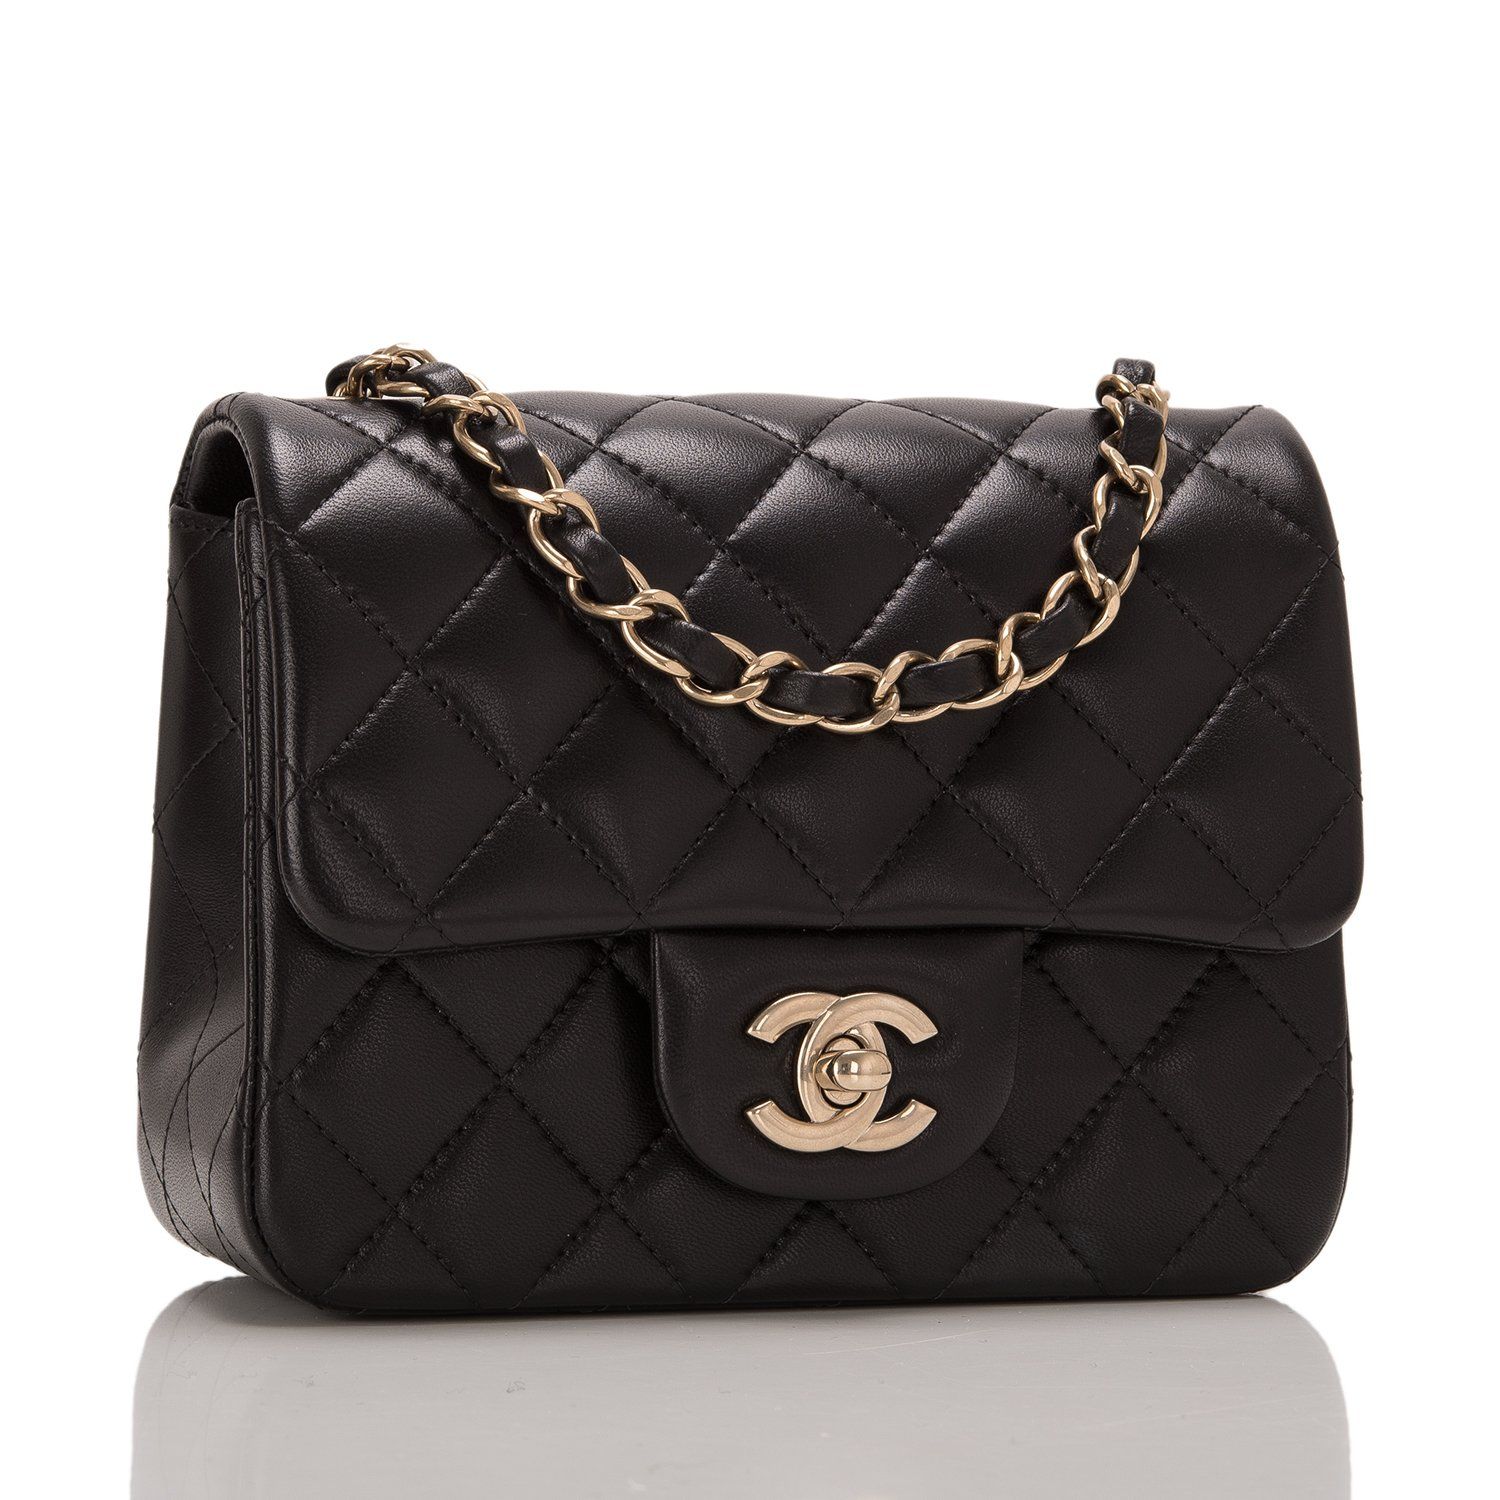 Сумка шанель карман улыбка. Chanel Mini Flap Bag. Сумка Chanel Flap Mini. Сумка Шанель Флэп бэг. Сумка Chanel 21k Mini.